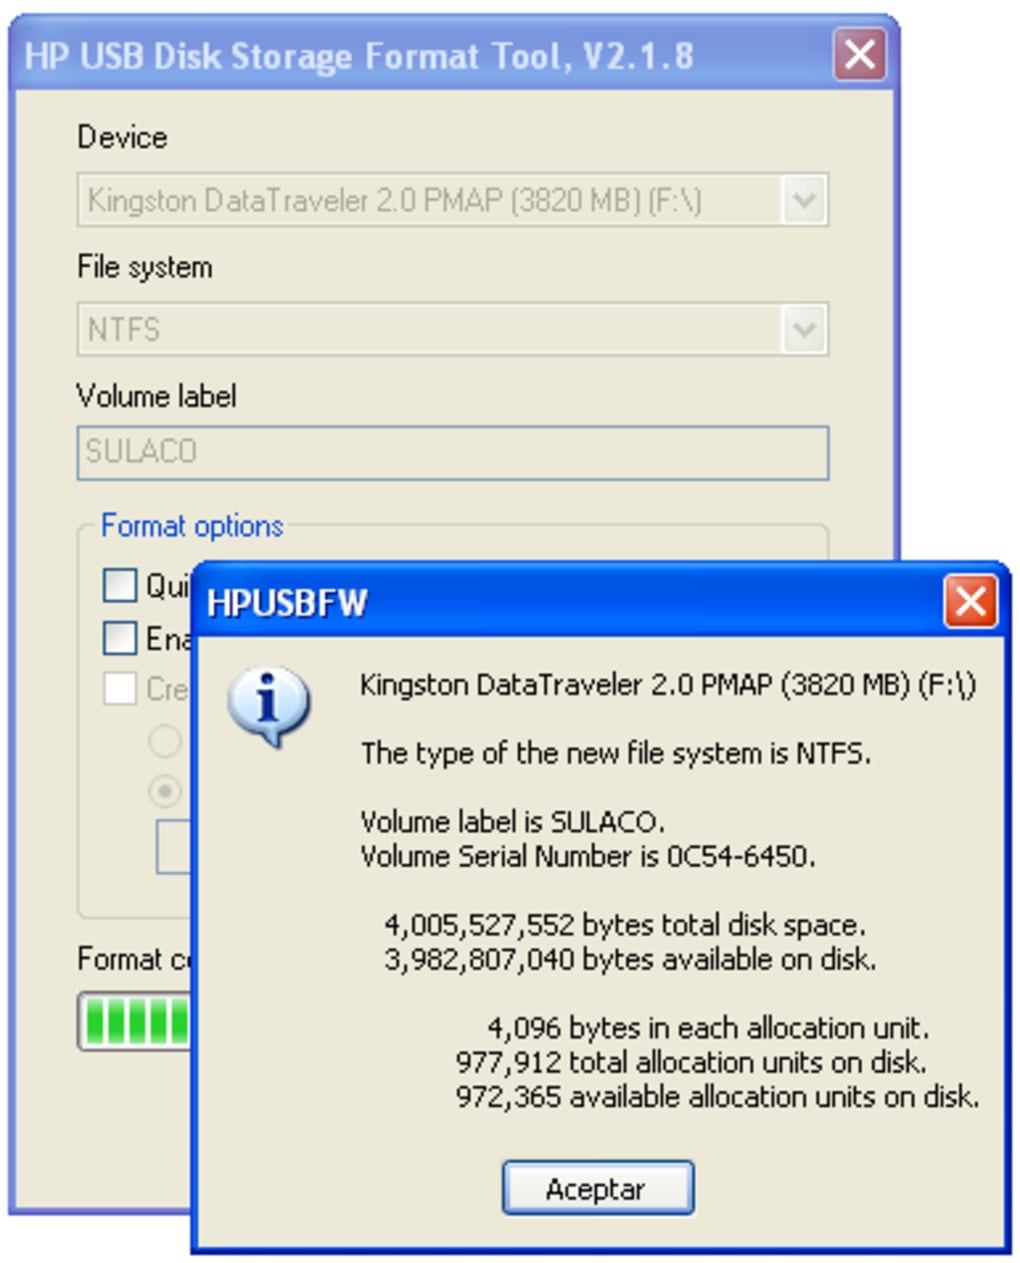 hp flash drive format tool